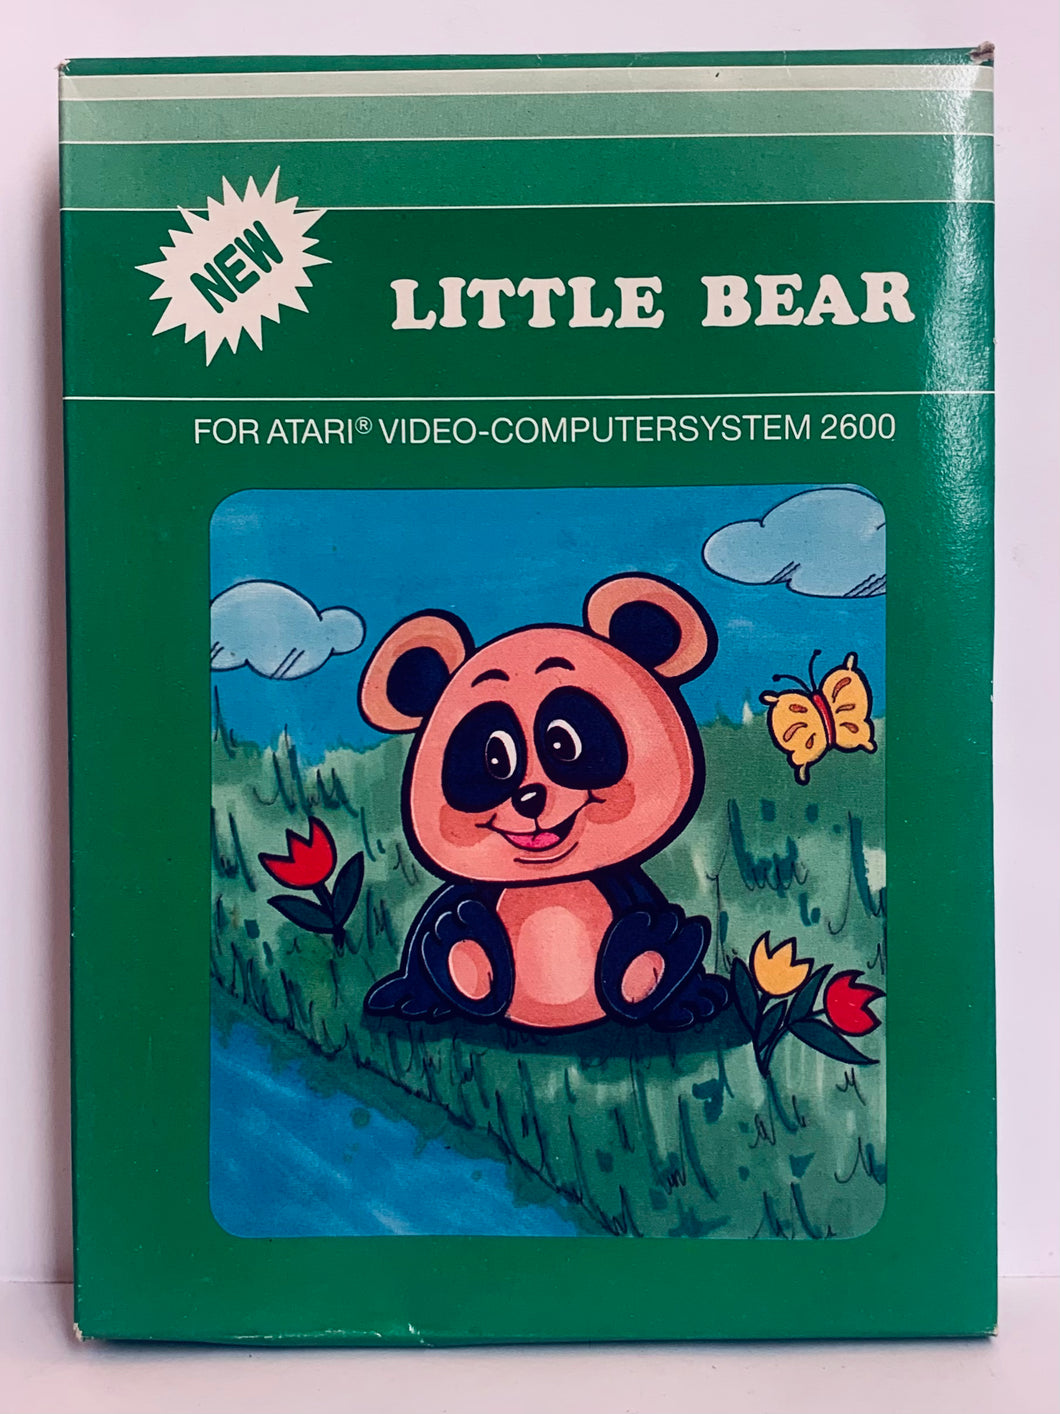 Little Bear - Atari VCS 2600 - NTSC - CIB